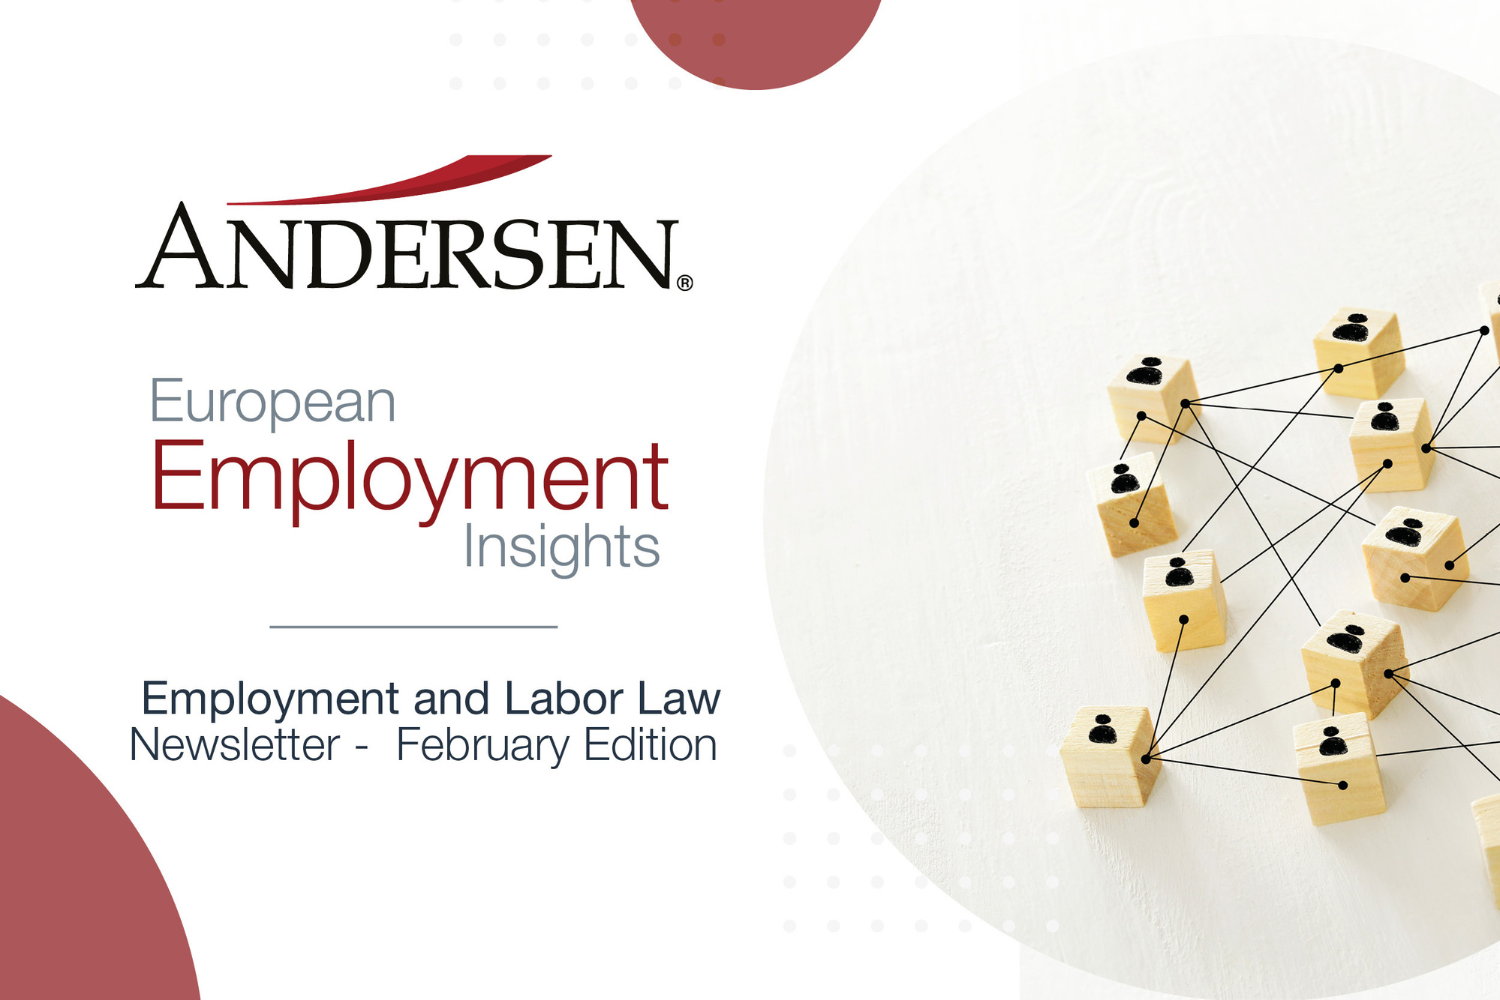 European Employment Insights: Newsletter Feb 24